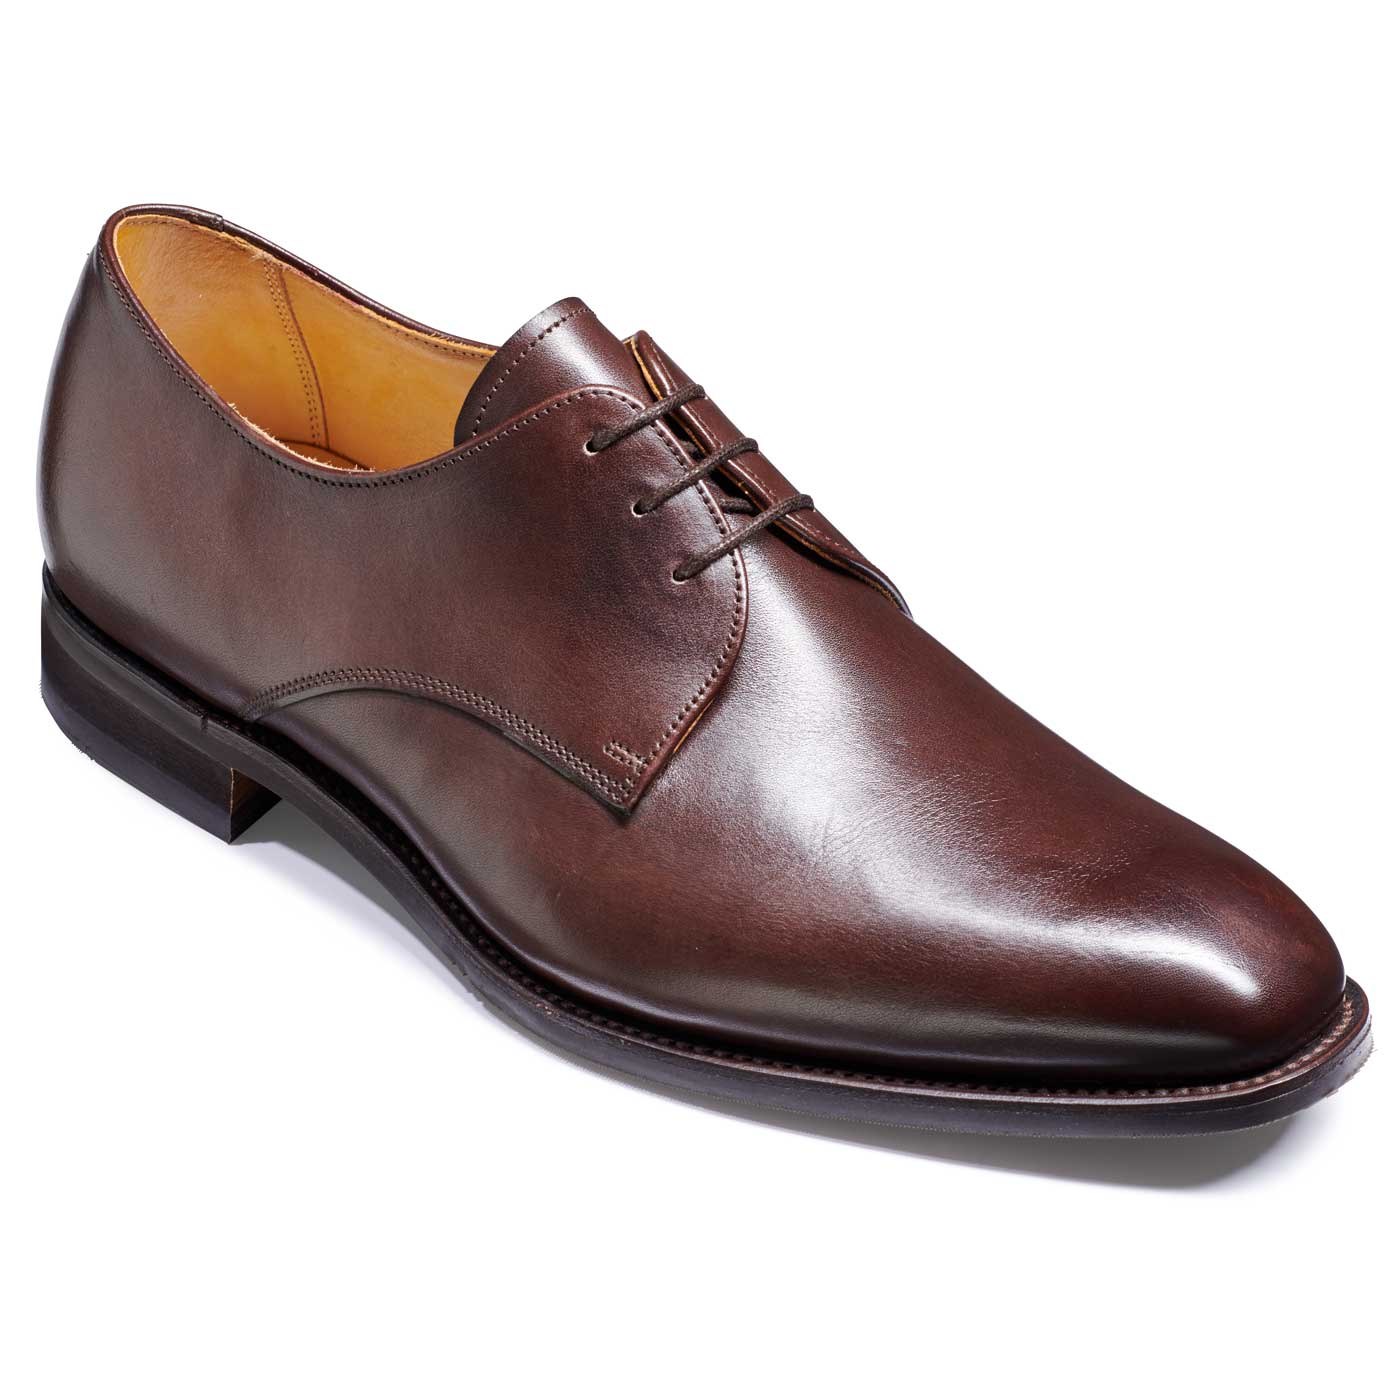 Barker St. Austell Shoes - Plain Fronted Derby - Dark Walnut Calf